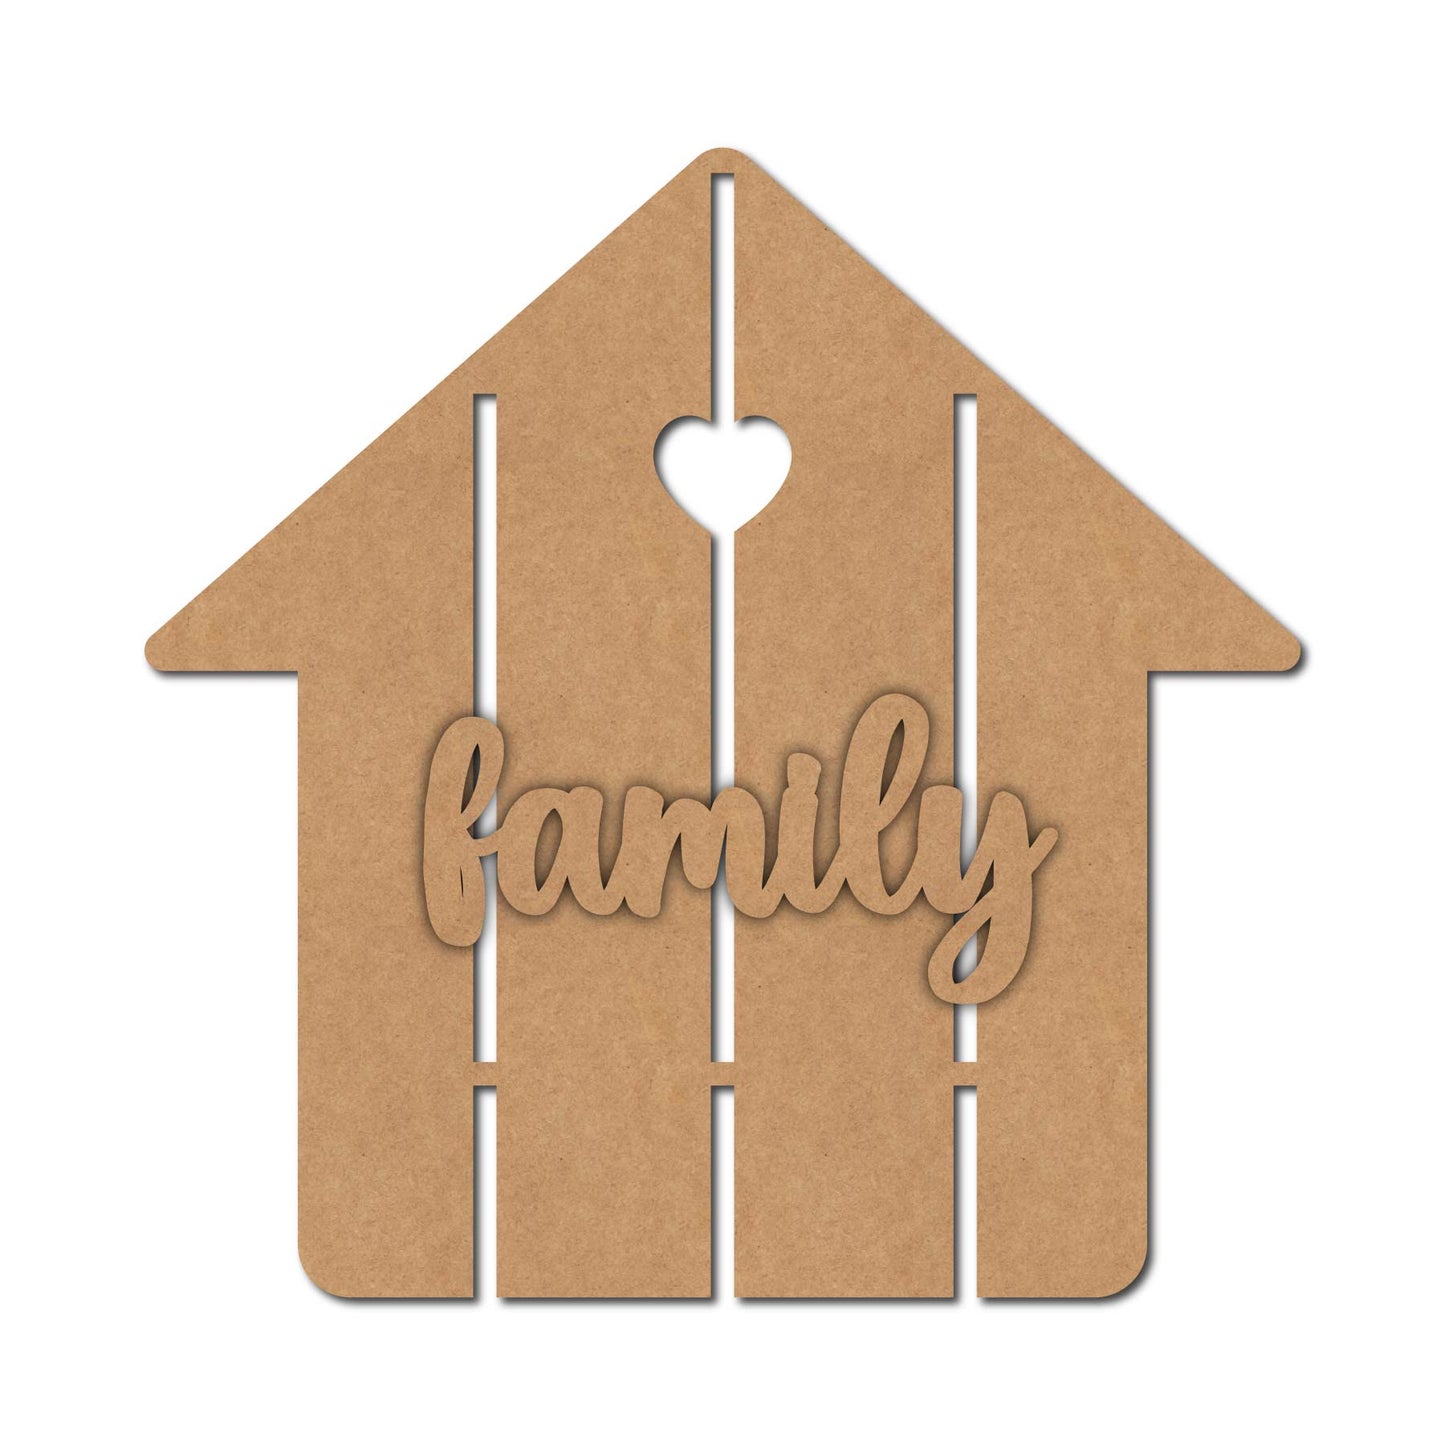 Family House Cutout MDF Design 1